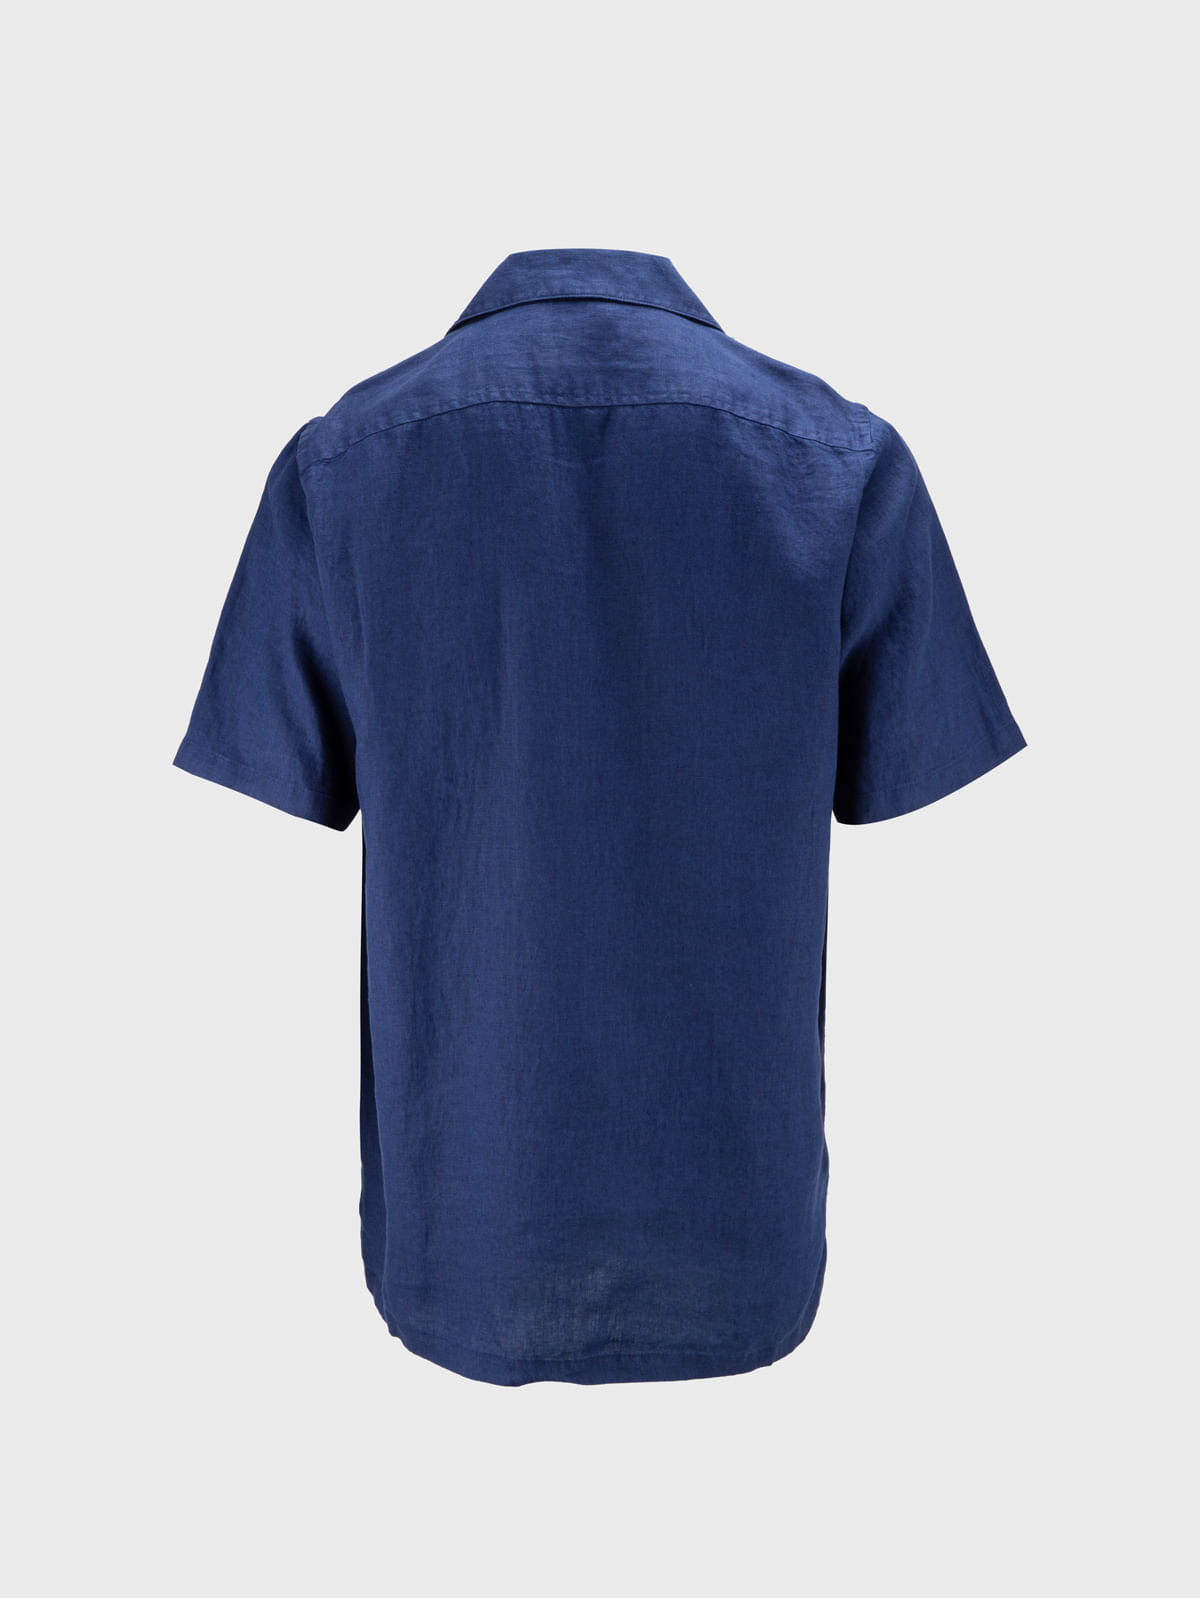 Camisa manga corta para hombre Leñadora Azul 100% Algodón - Chimay Oficial